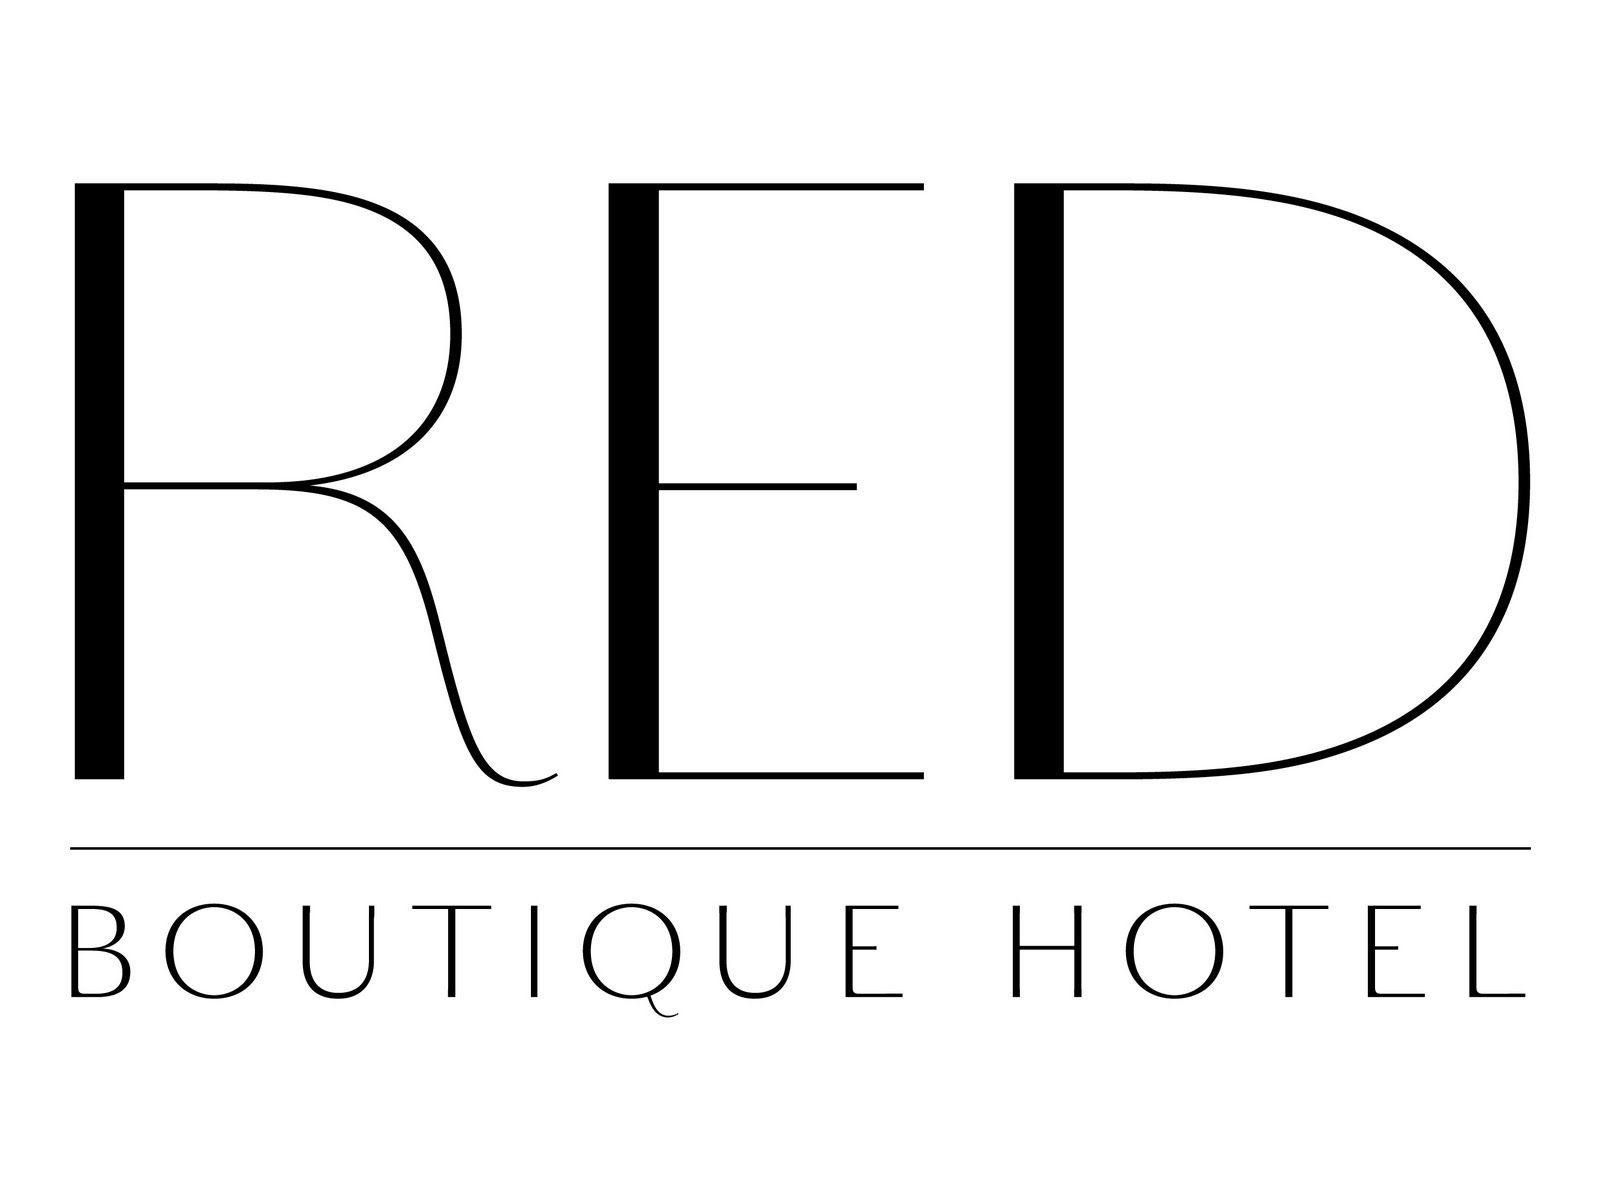 Red Boutique Logo - C Designz: Red Boutique Hotel